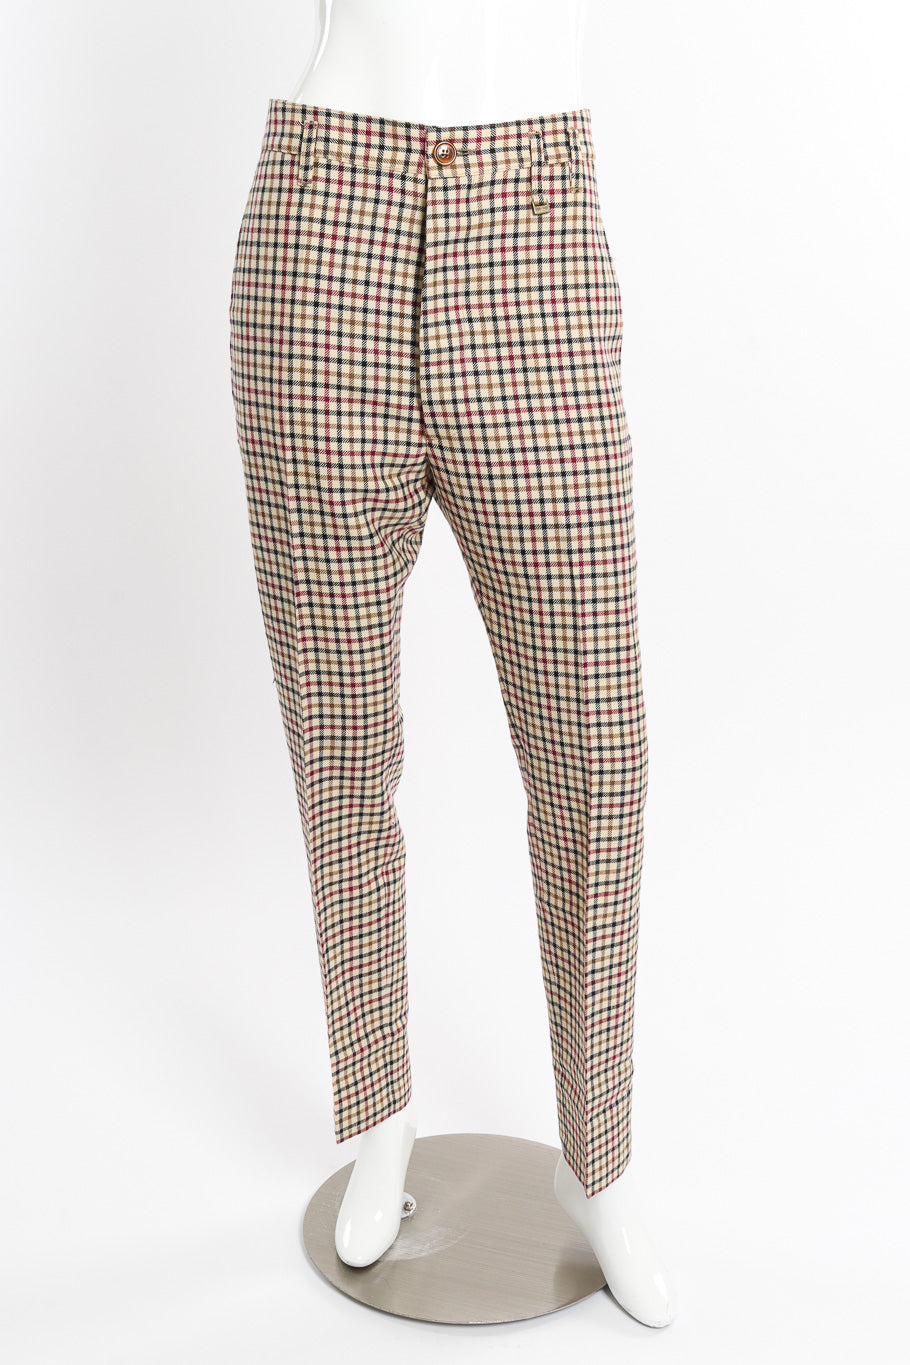 2011 F/W Gingham Vest & Trouser Set by Vivienne Westwood on mannequin pants only front  @recessla